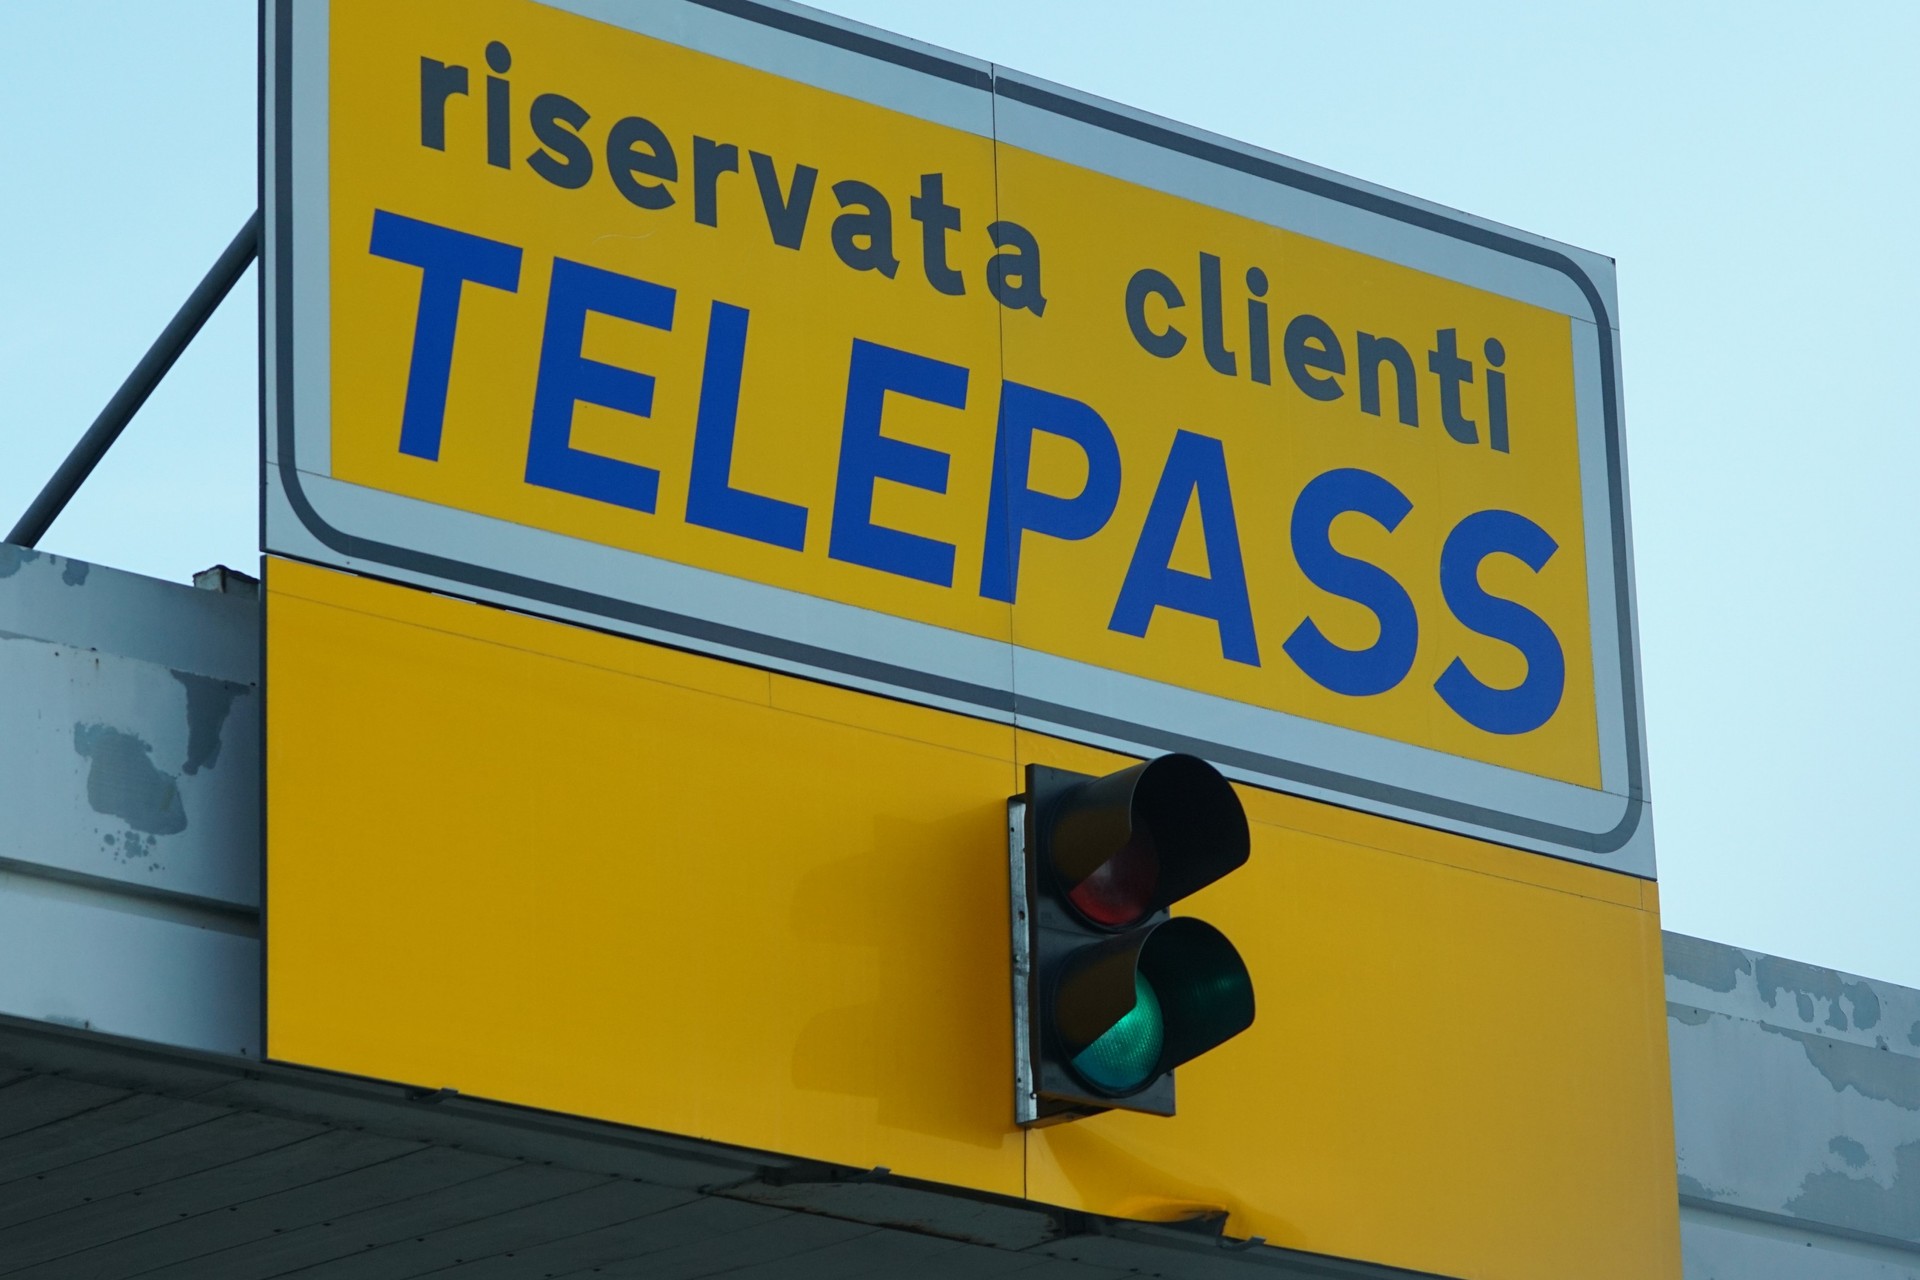 The European Telepass is also valid on Croatian motorways